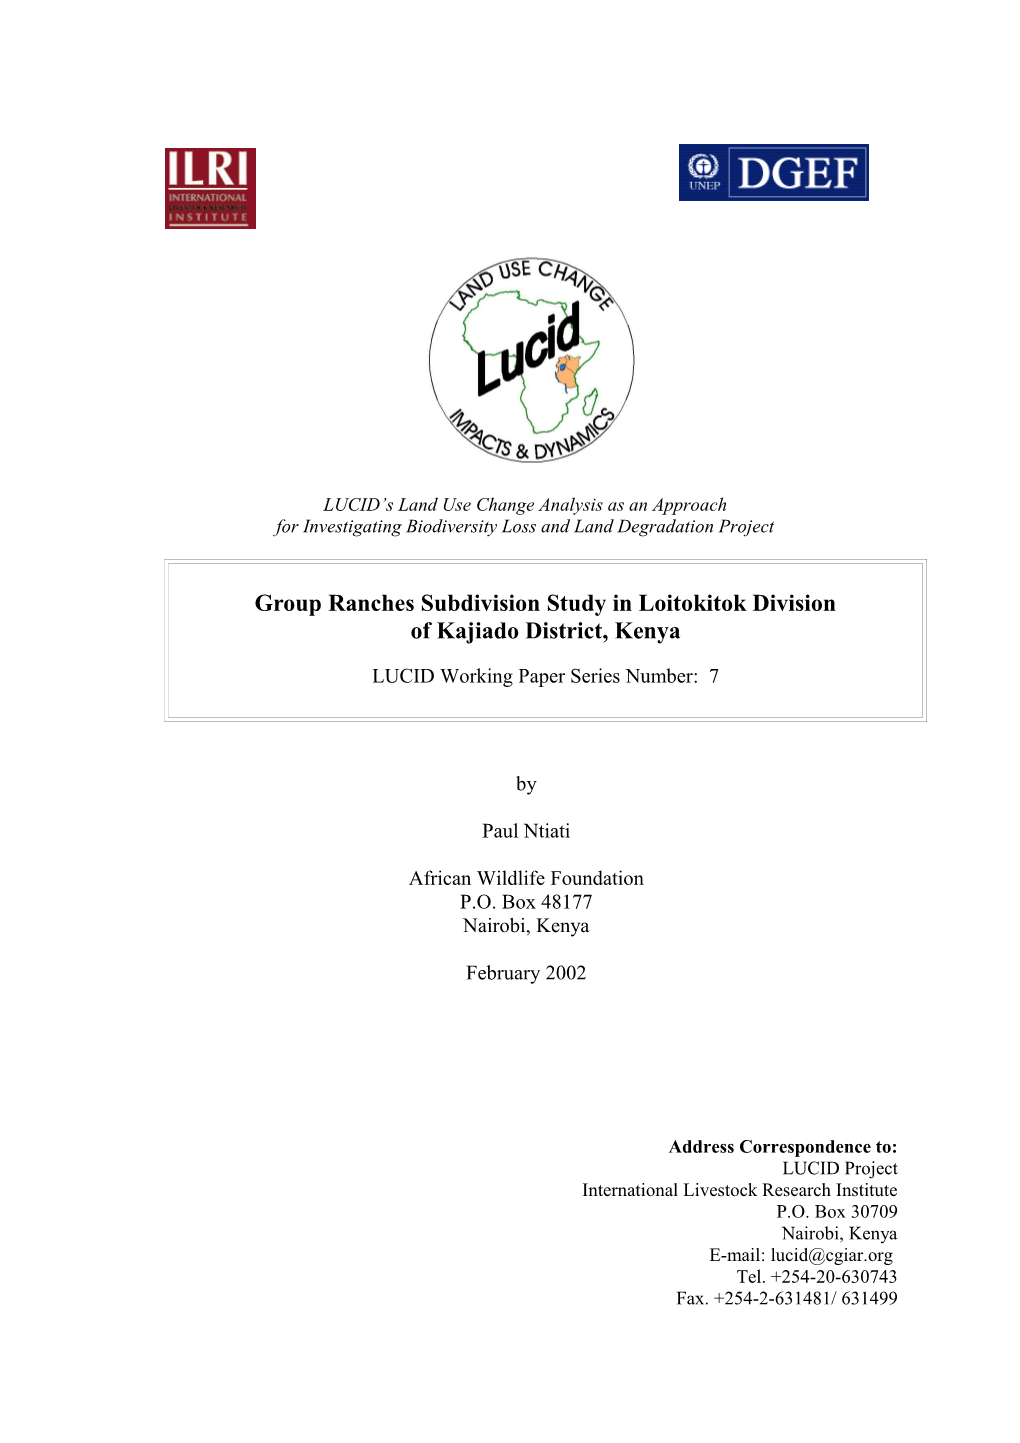 Guidelines for Group Ranches Subdivision Study in Loitokitok Division of Kajiado District